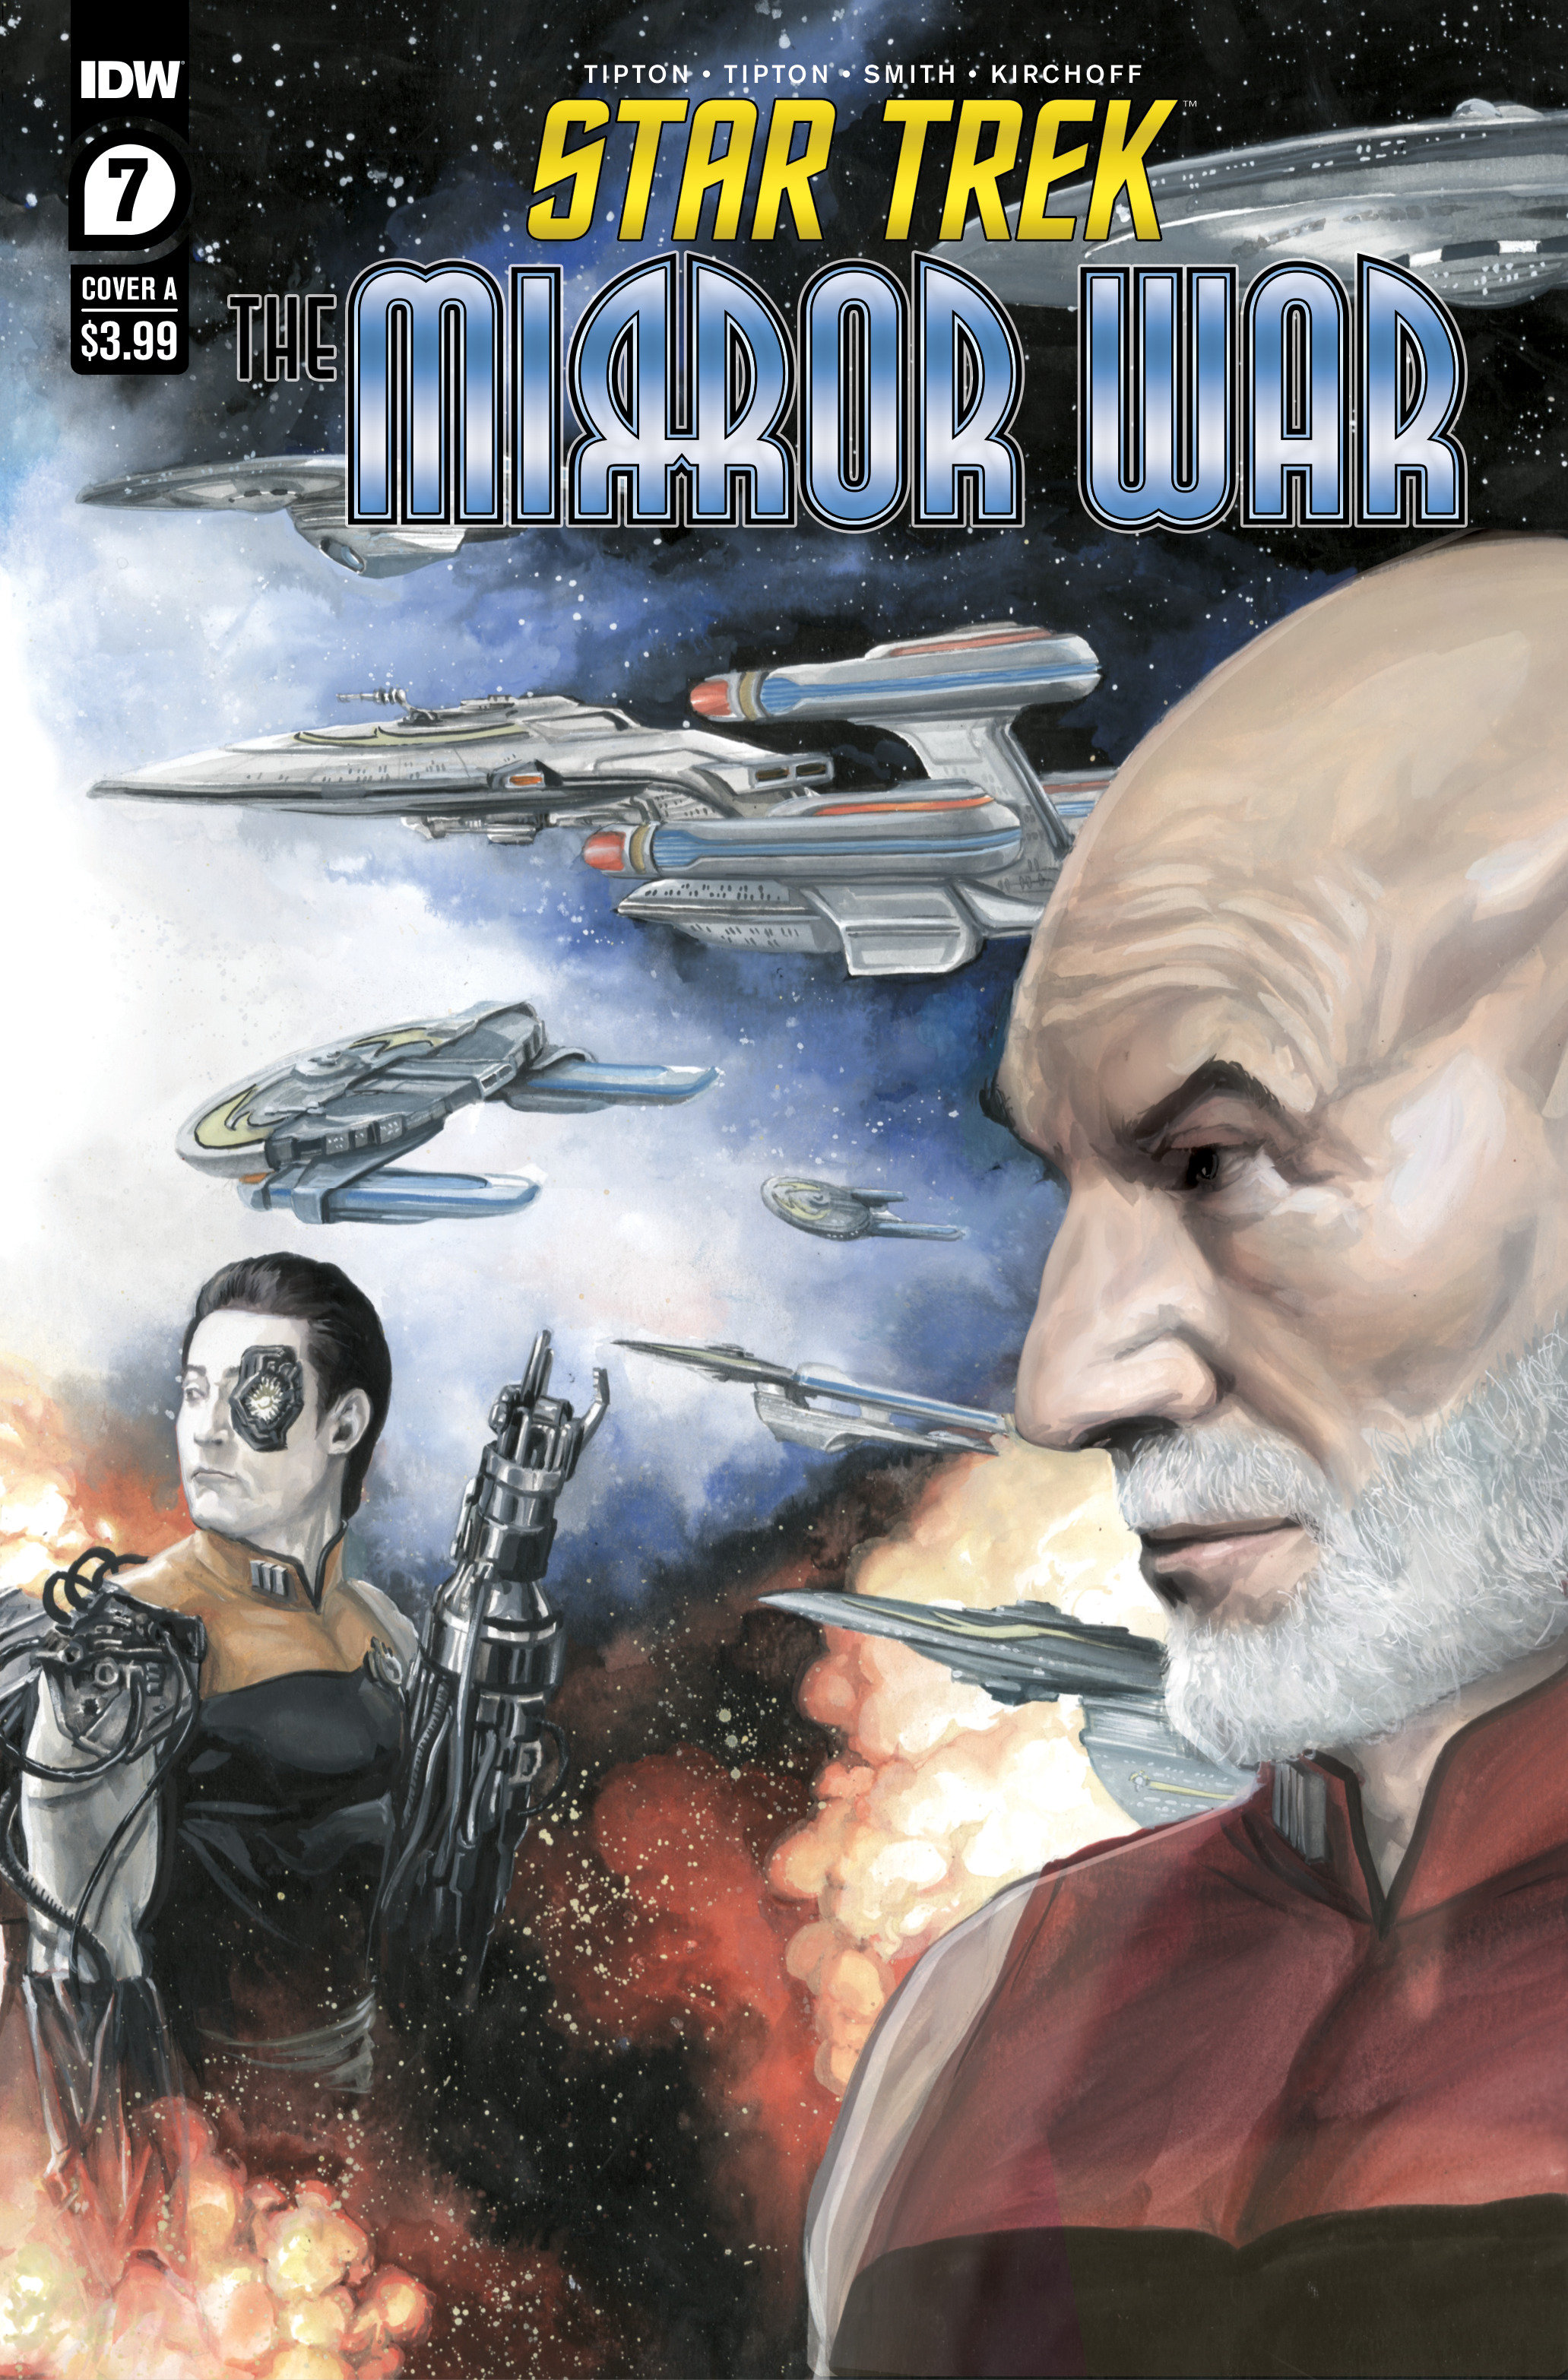 Star Trek The Mirror War #7 Cover A Woodward